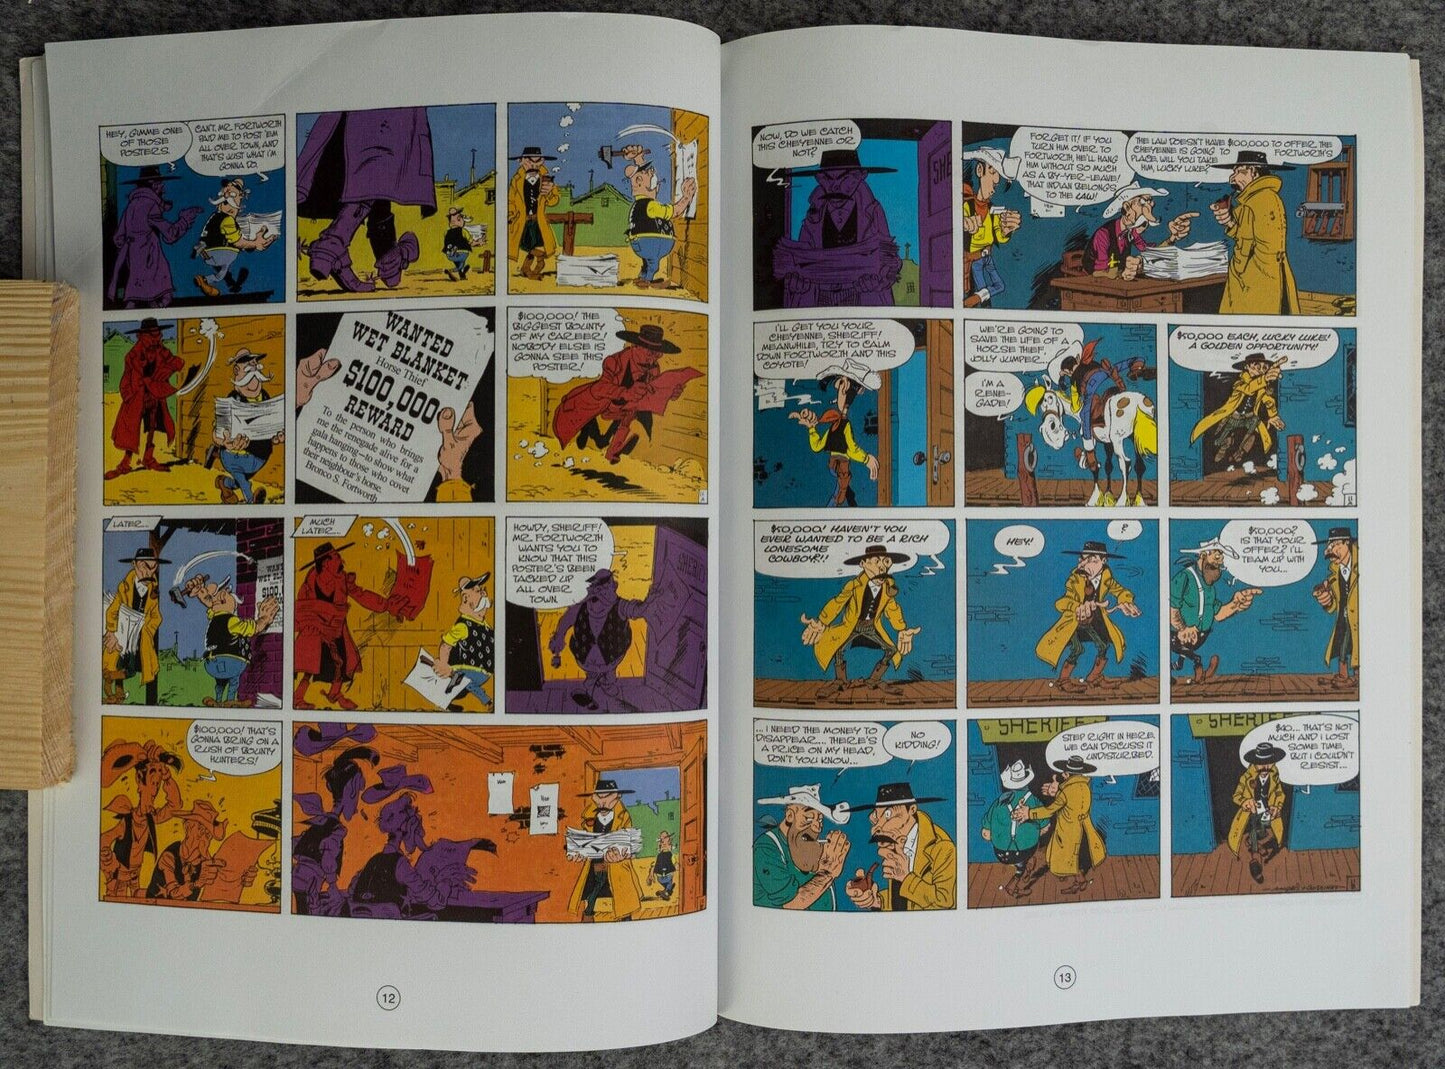 26 The Bounty Hunter Lucky Luke Cinebook Paperback UK Comic Book